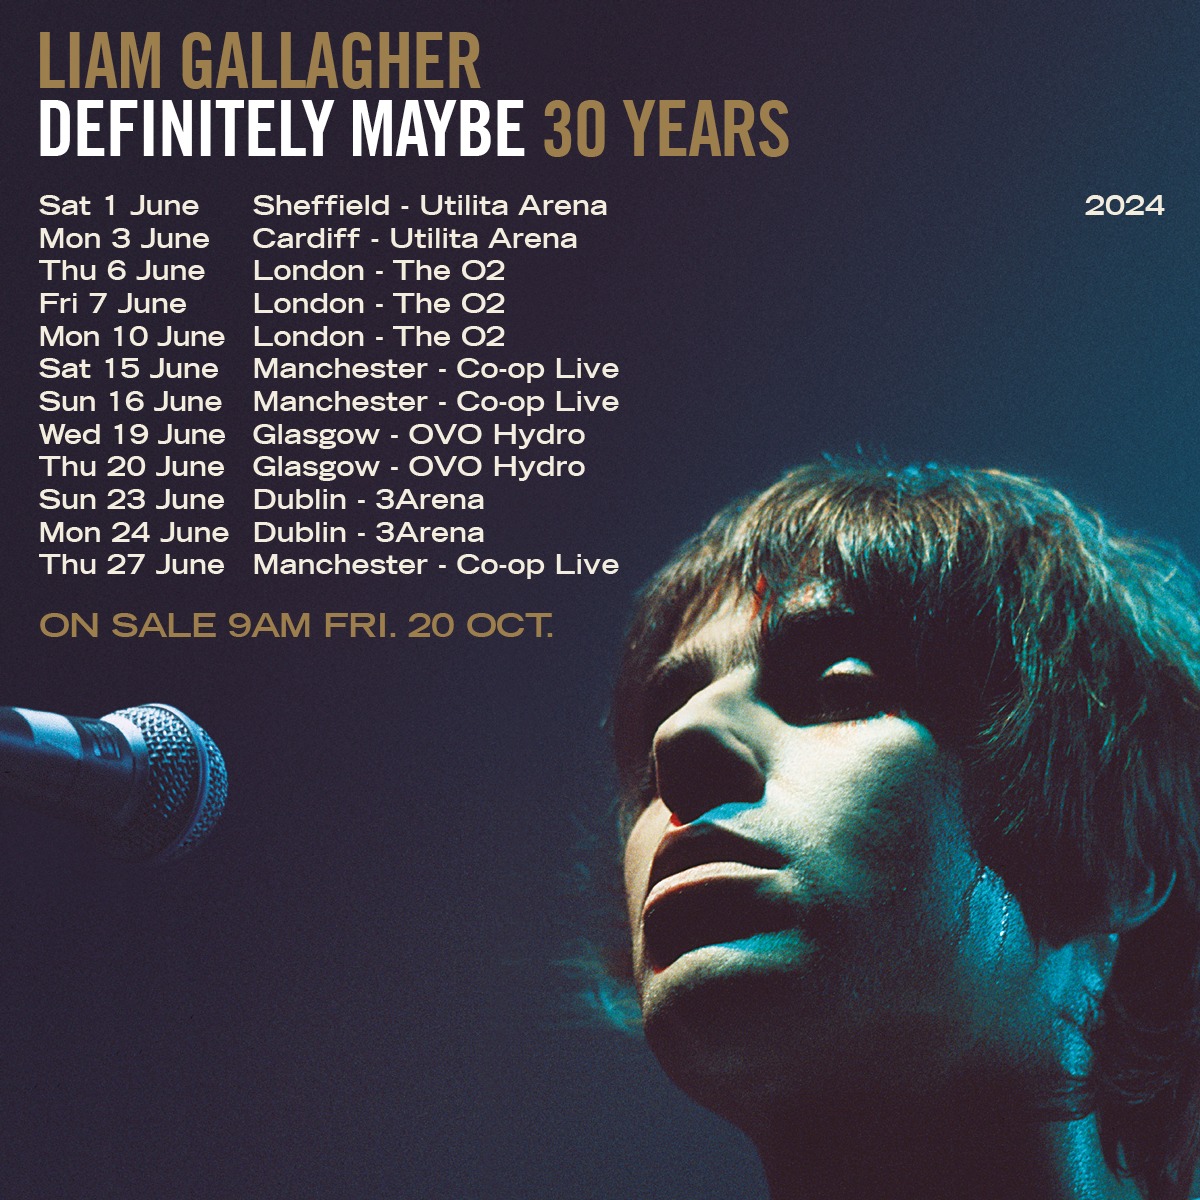 Billets Liam Gallagher (Co-op Live - Manchester)